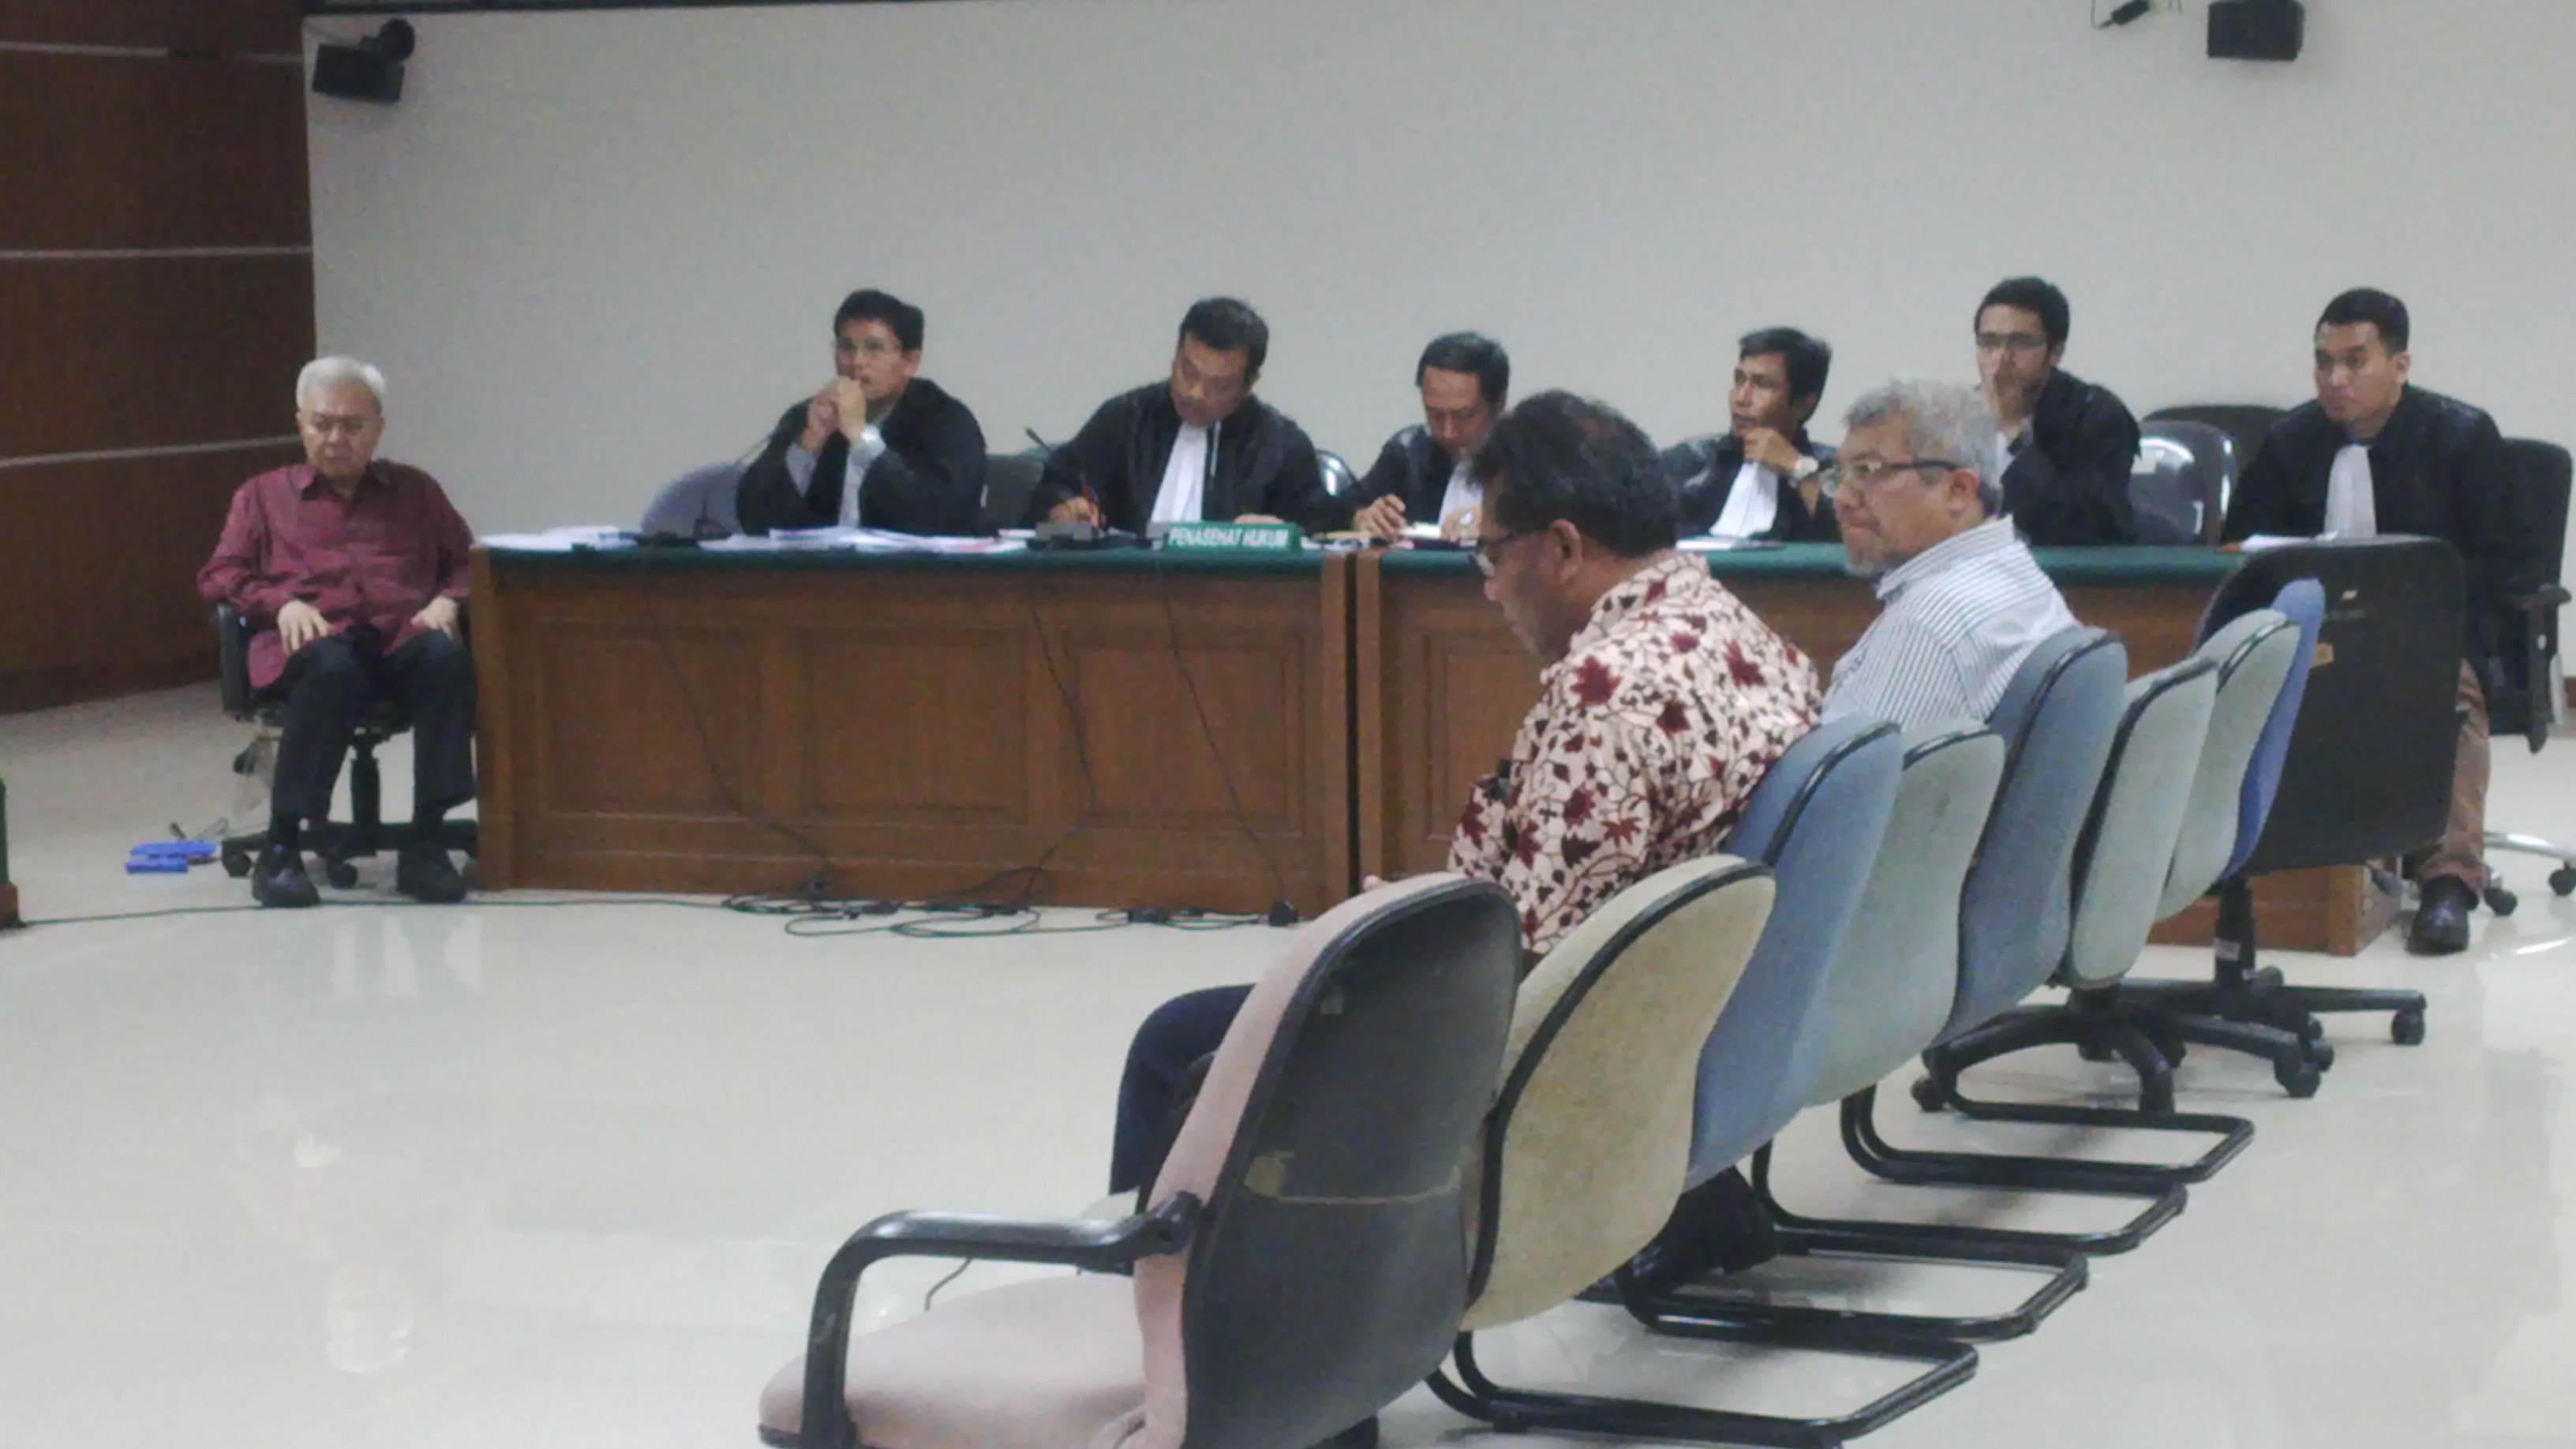 Mantan Menhut MS Kaban (berkemeja putih bergaris-garis) saat menjadi saksi dalam sidang korupsi atas terdakwa Anggoro Widjojo di Pengadilan Tipikor Jakarta, Rabu (28/5). Foto: NOV. 